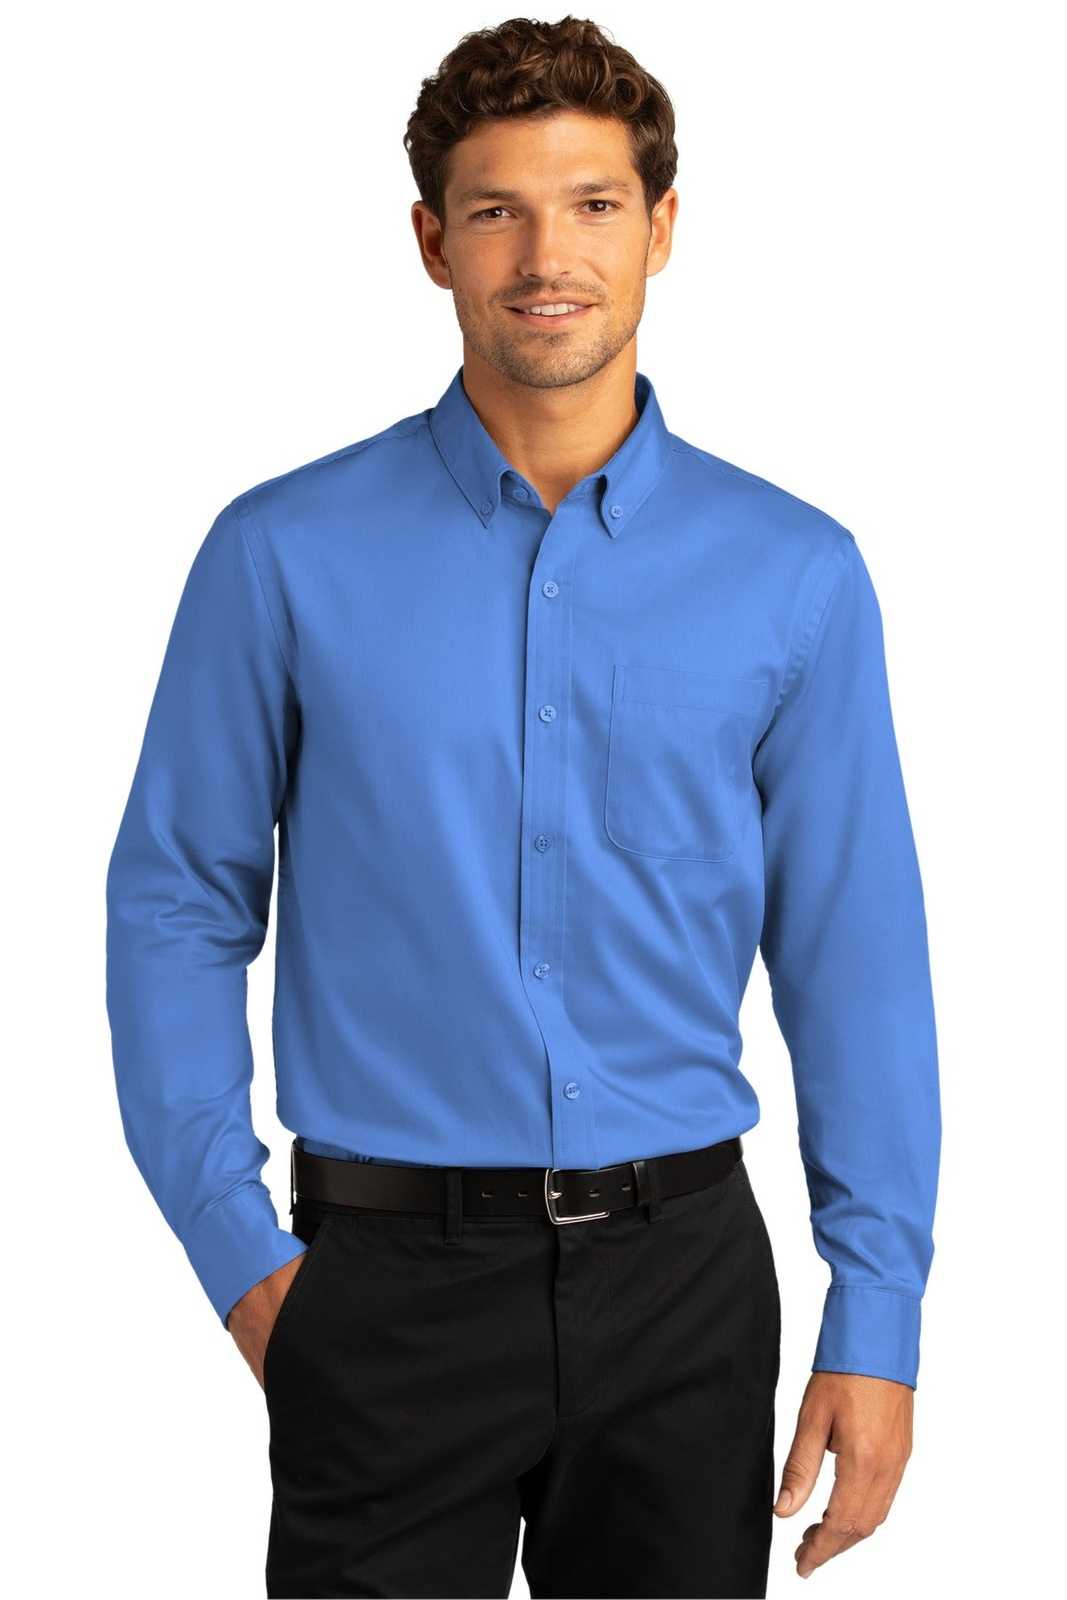 Port Authority W808 Long Sleeve SuperPro React Twill Shirt - Ultramarine Blue - HIT a Double - 1